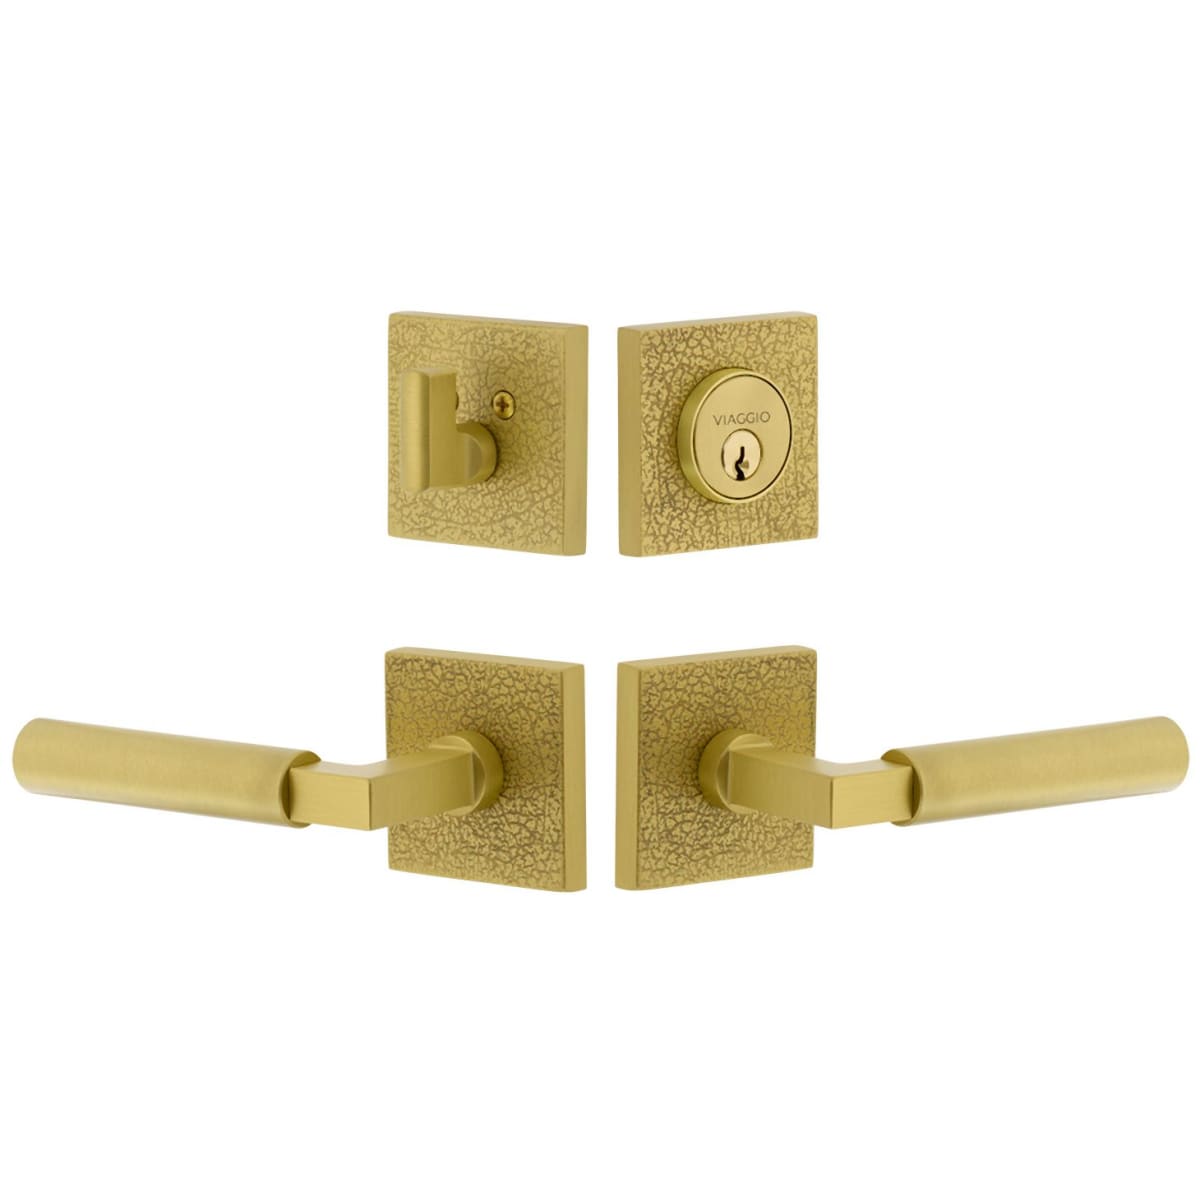 3 Lever Lock & Keys Door Handle Satin Finish On Backplate Stellar Lock Handles